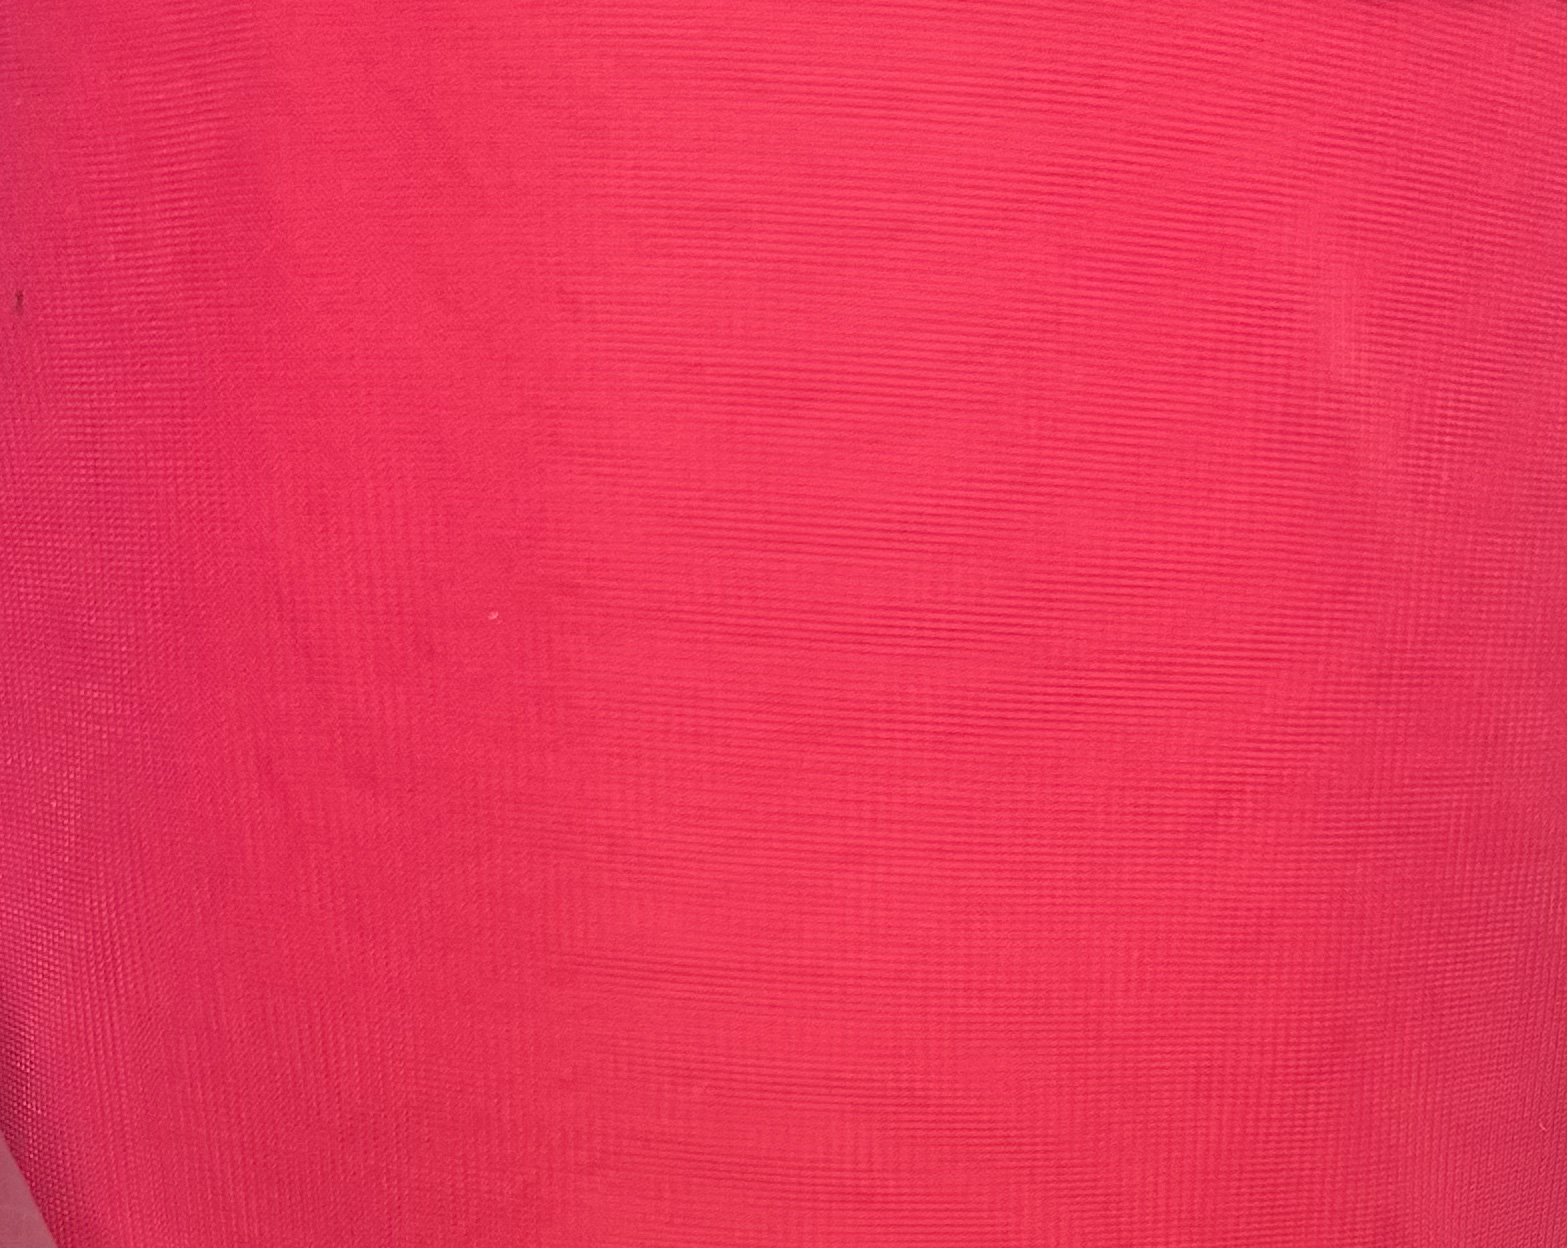 Raspberry Nylon Chiffon Fabric